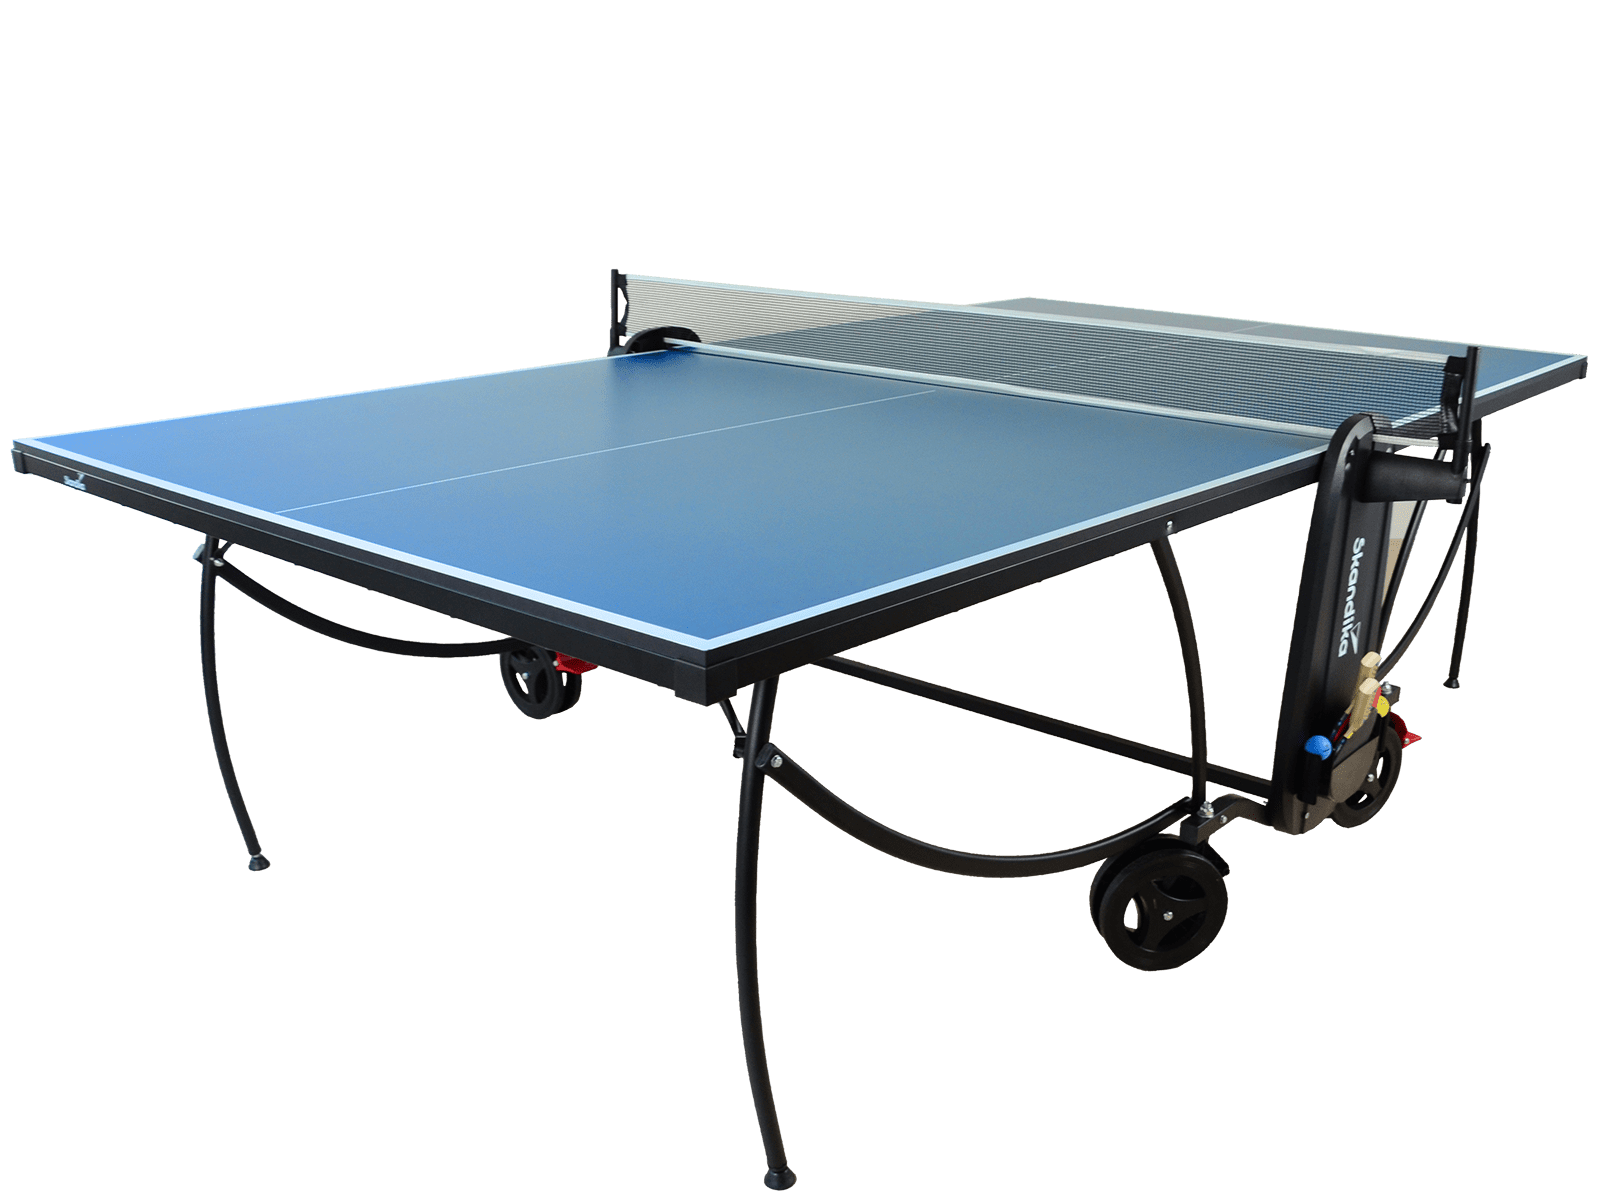 Table de ping pong indoor bleue - table pliable avec 2 raquettes